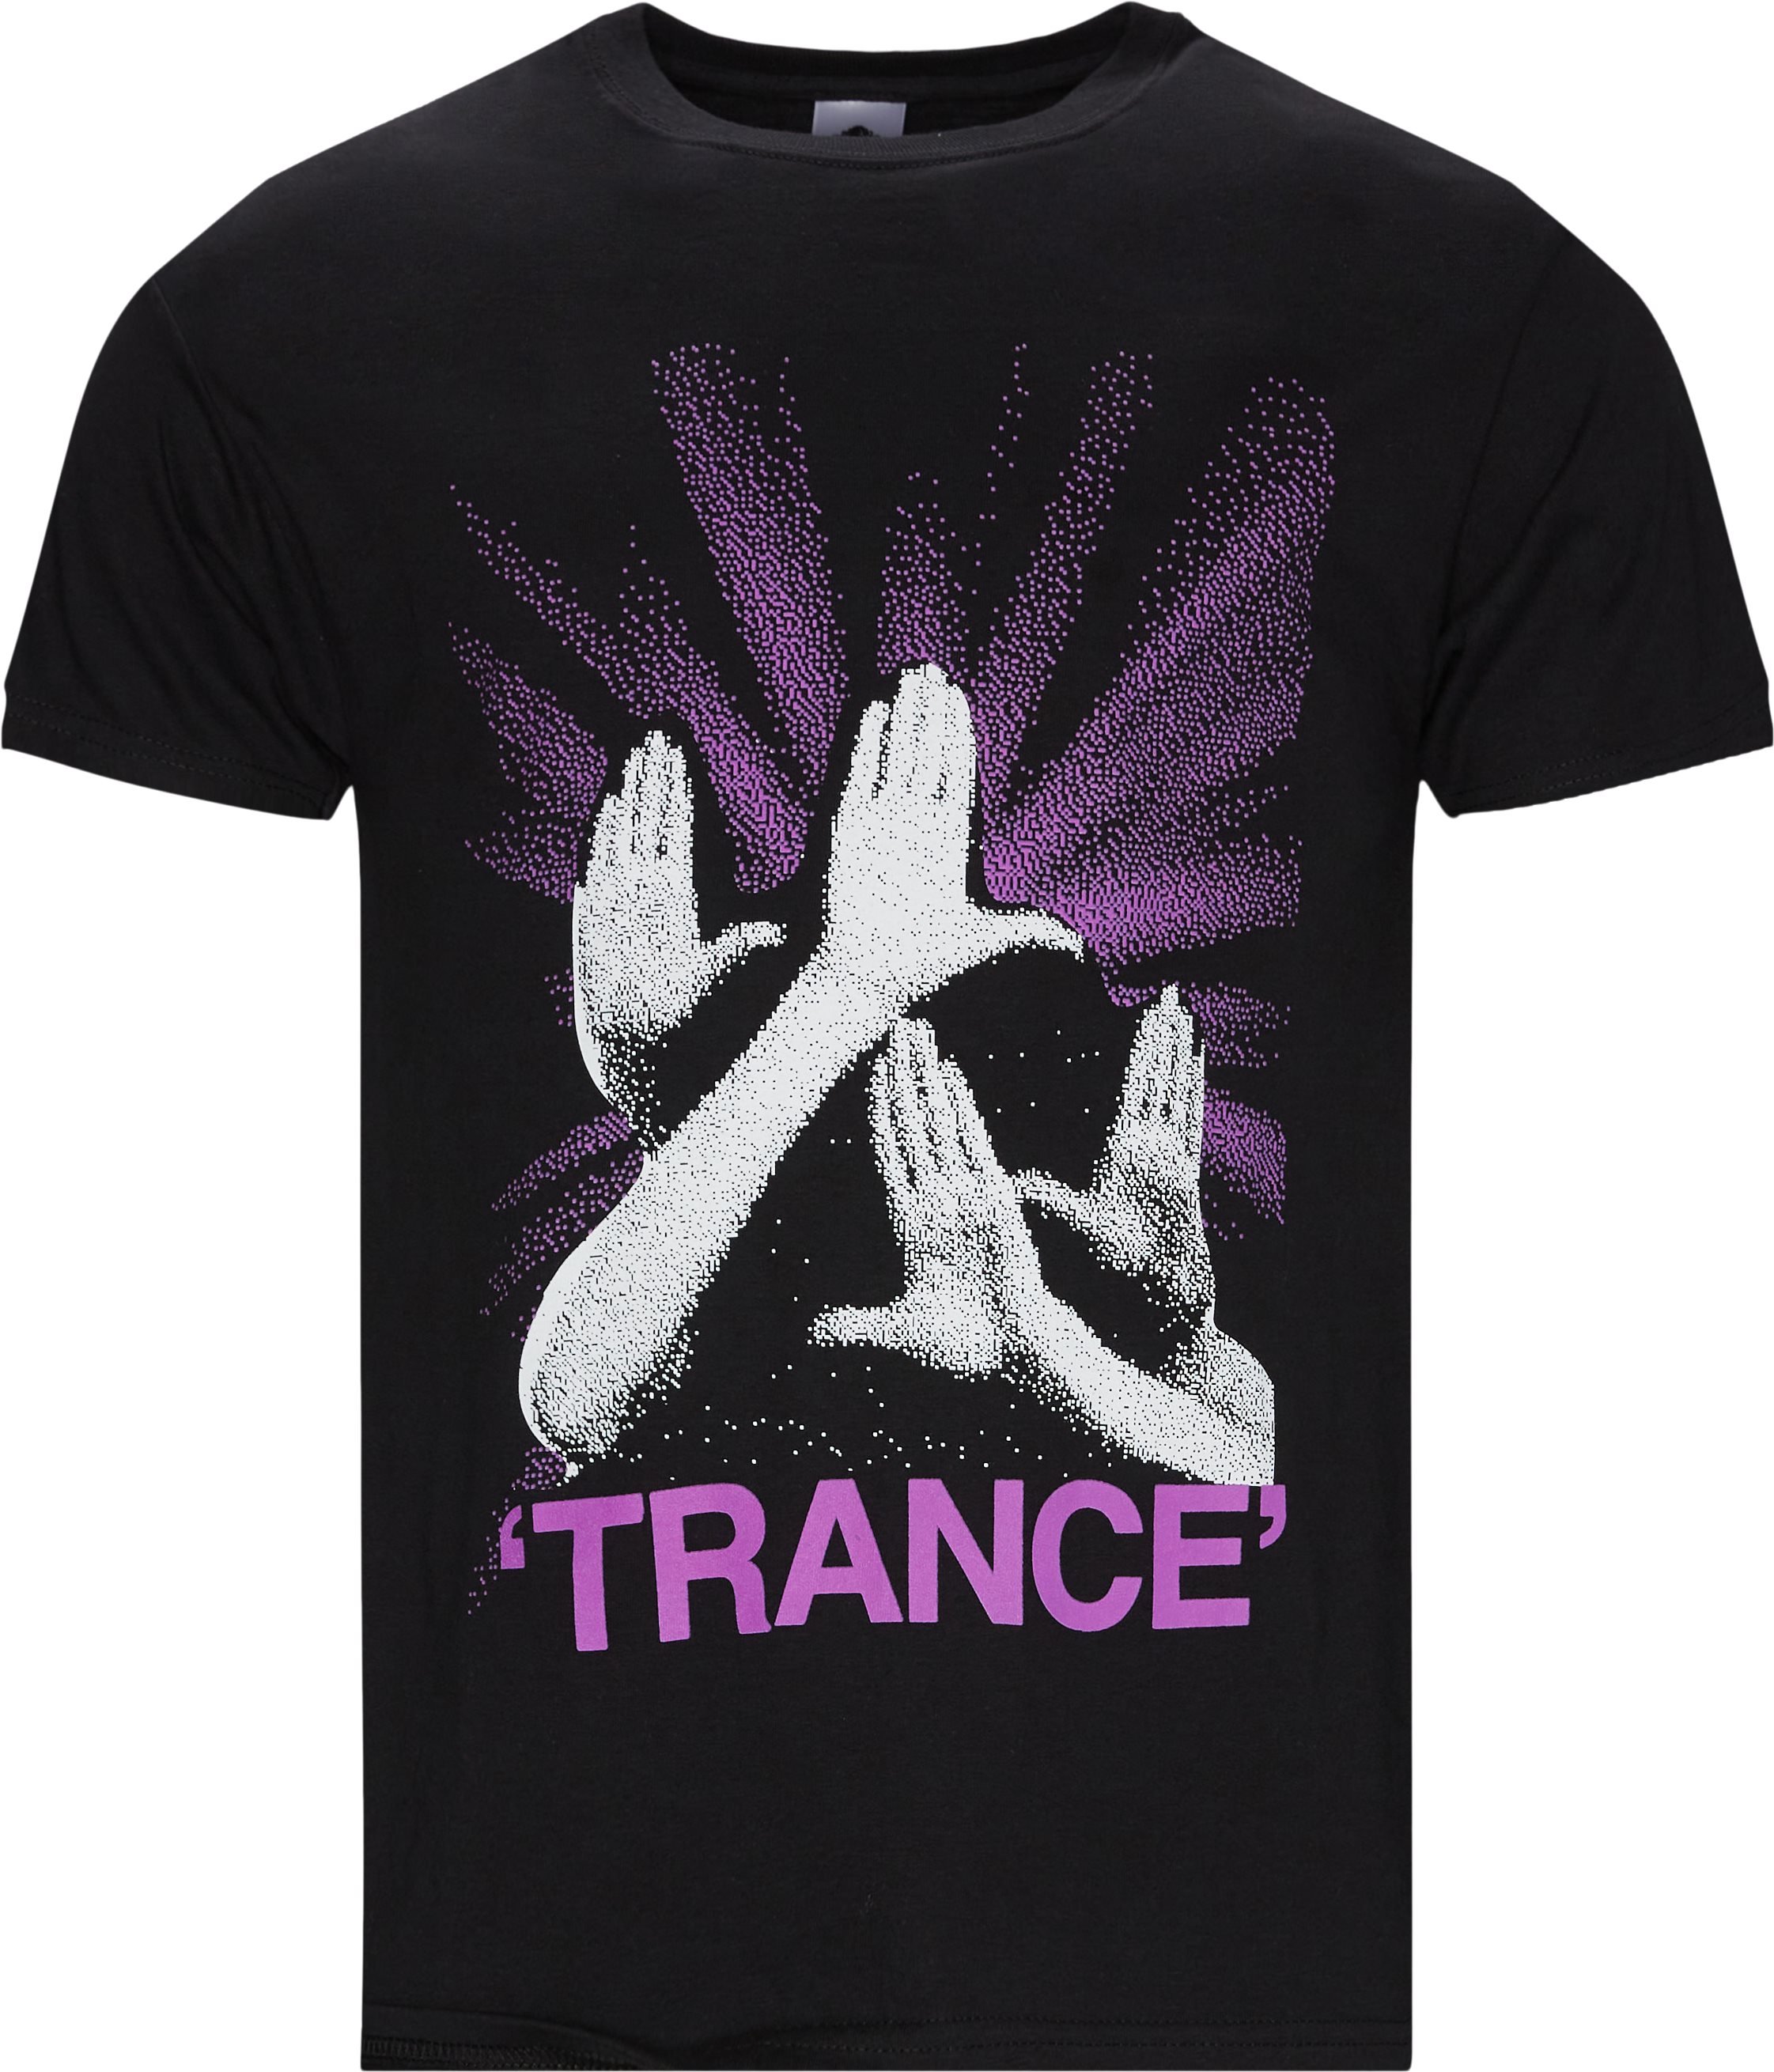 Trance Tee - T-shirts - Regular fit - Sort